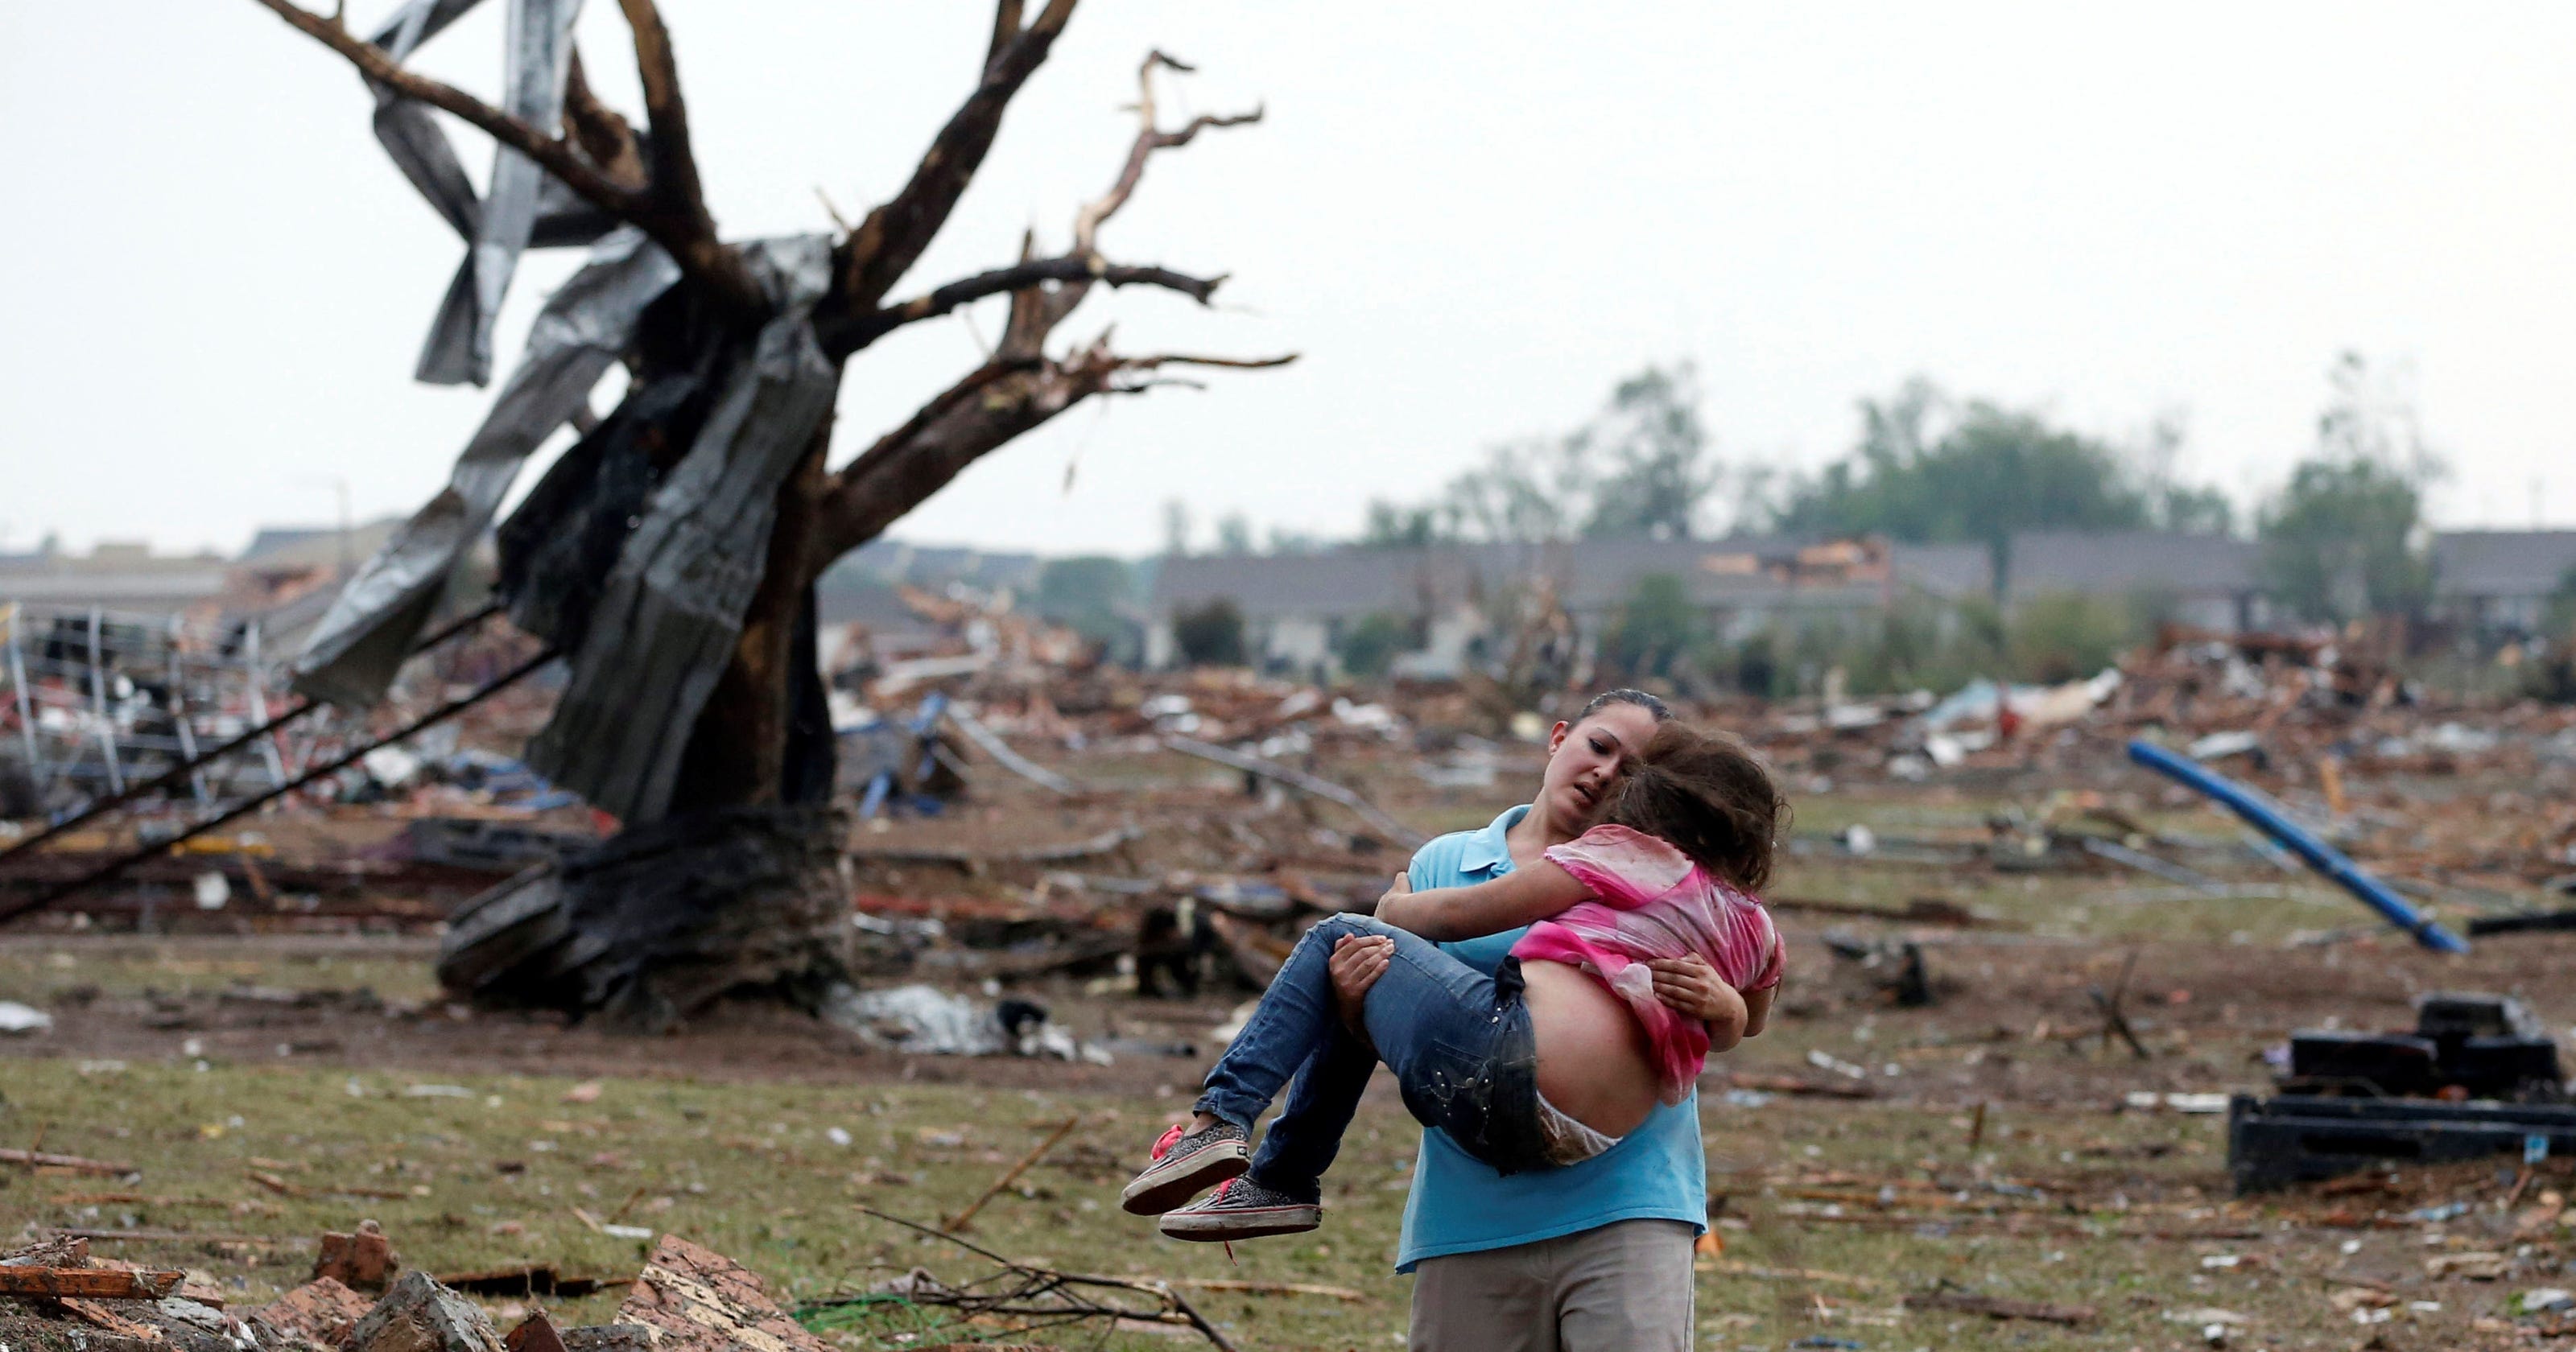 How to help Oklahoma tornado victims3200 x 1680